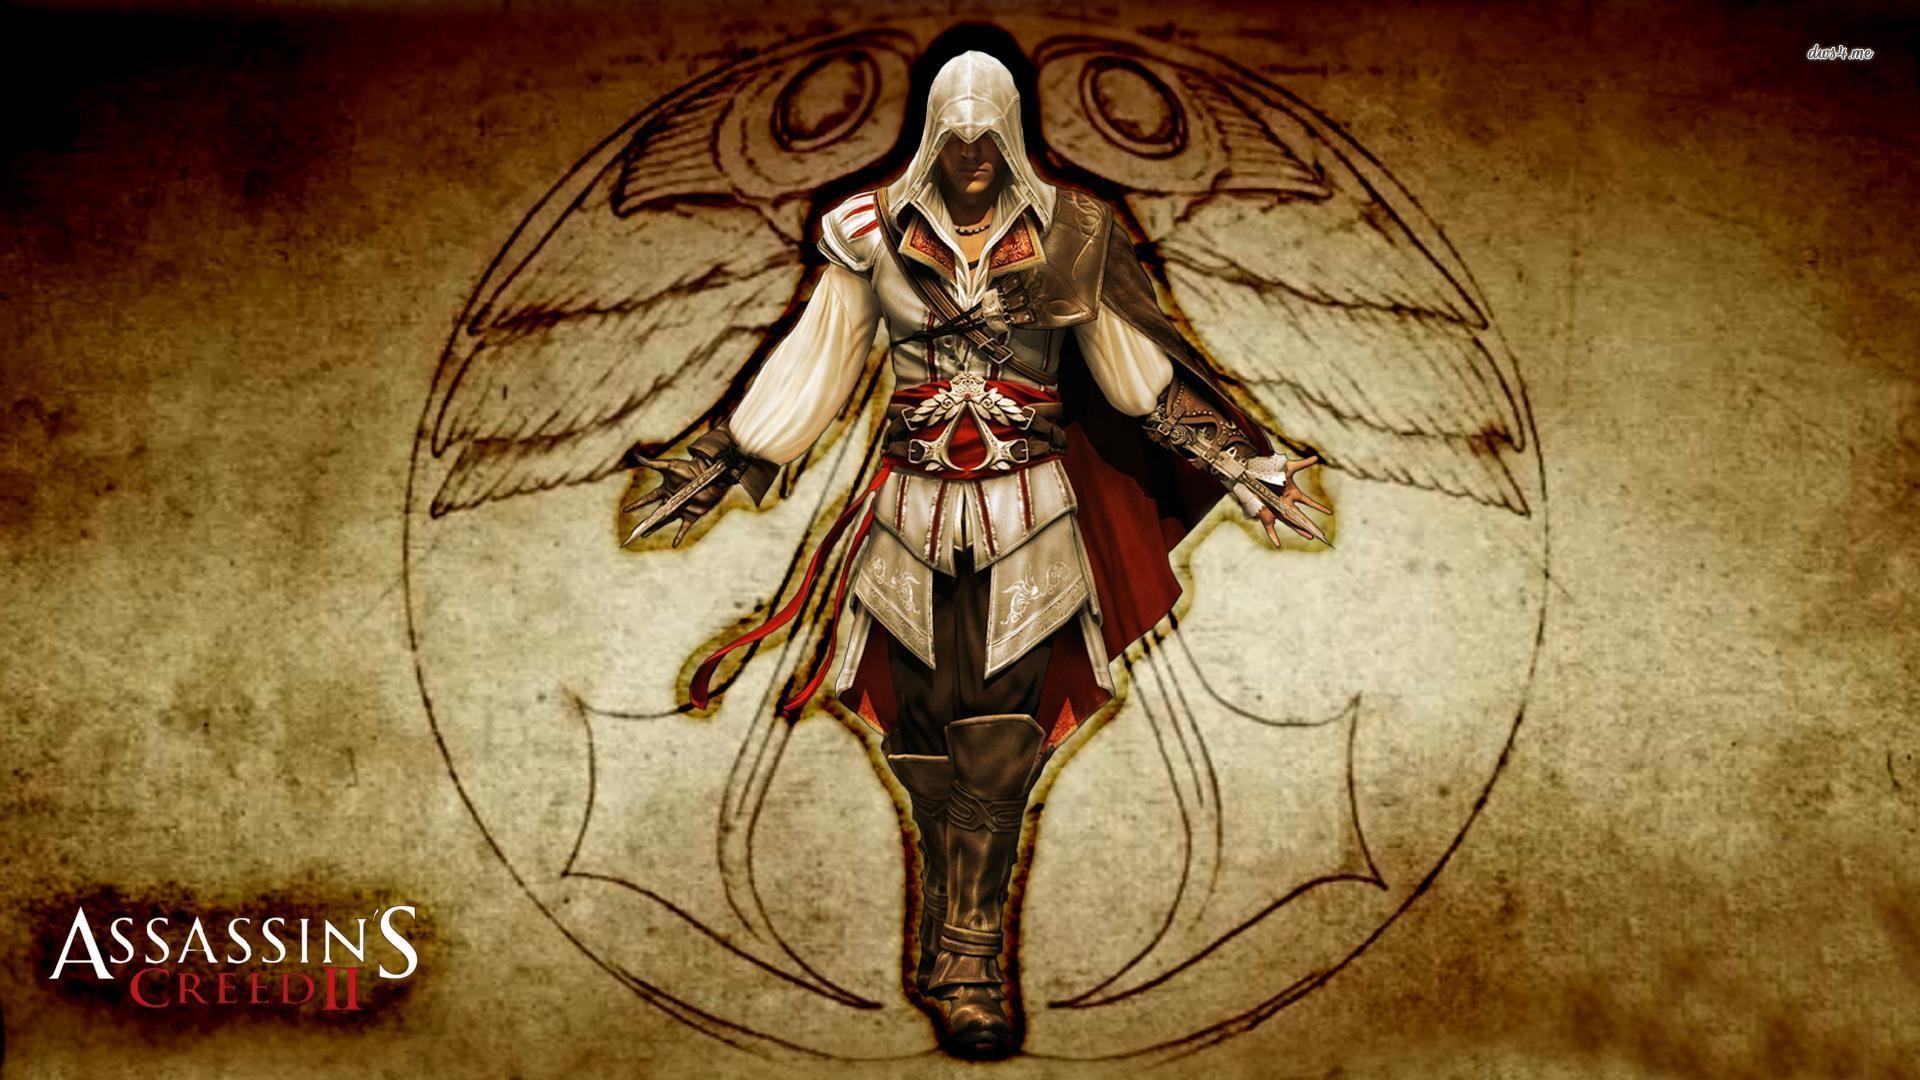 1920x1080 Ezio - Assassin's Creed II wallpaper - Game wallpapers - #